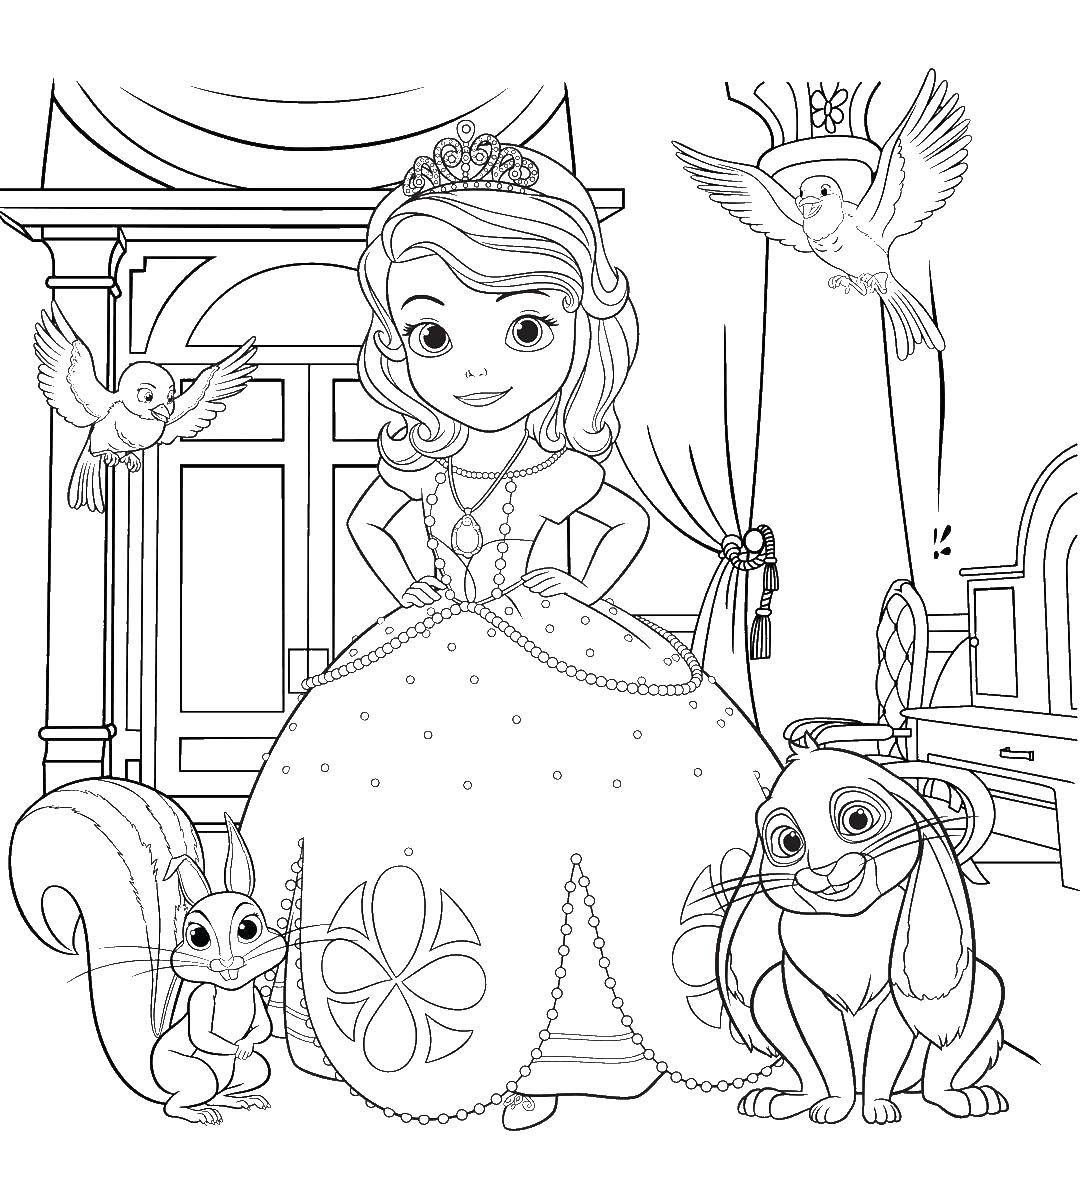 Coloring Princess Sofia and friends. Category cartoons. Tags:  Princess Sophia.